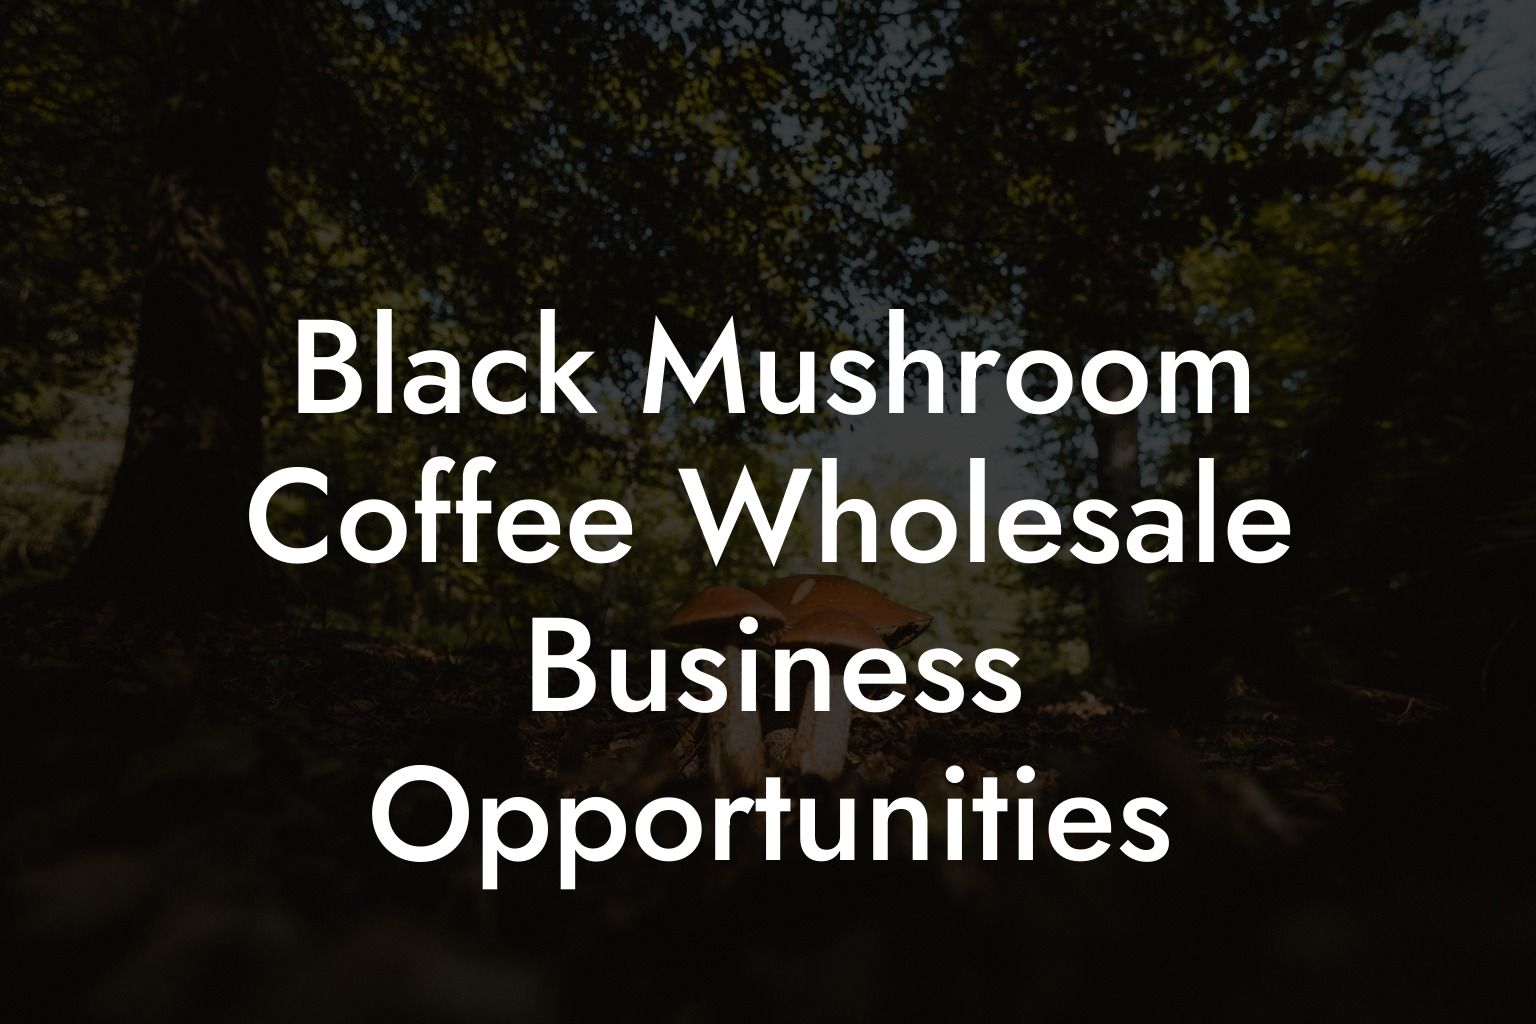 Black Mushroom Coffee Wholesale Business Opportunities